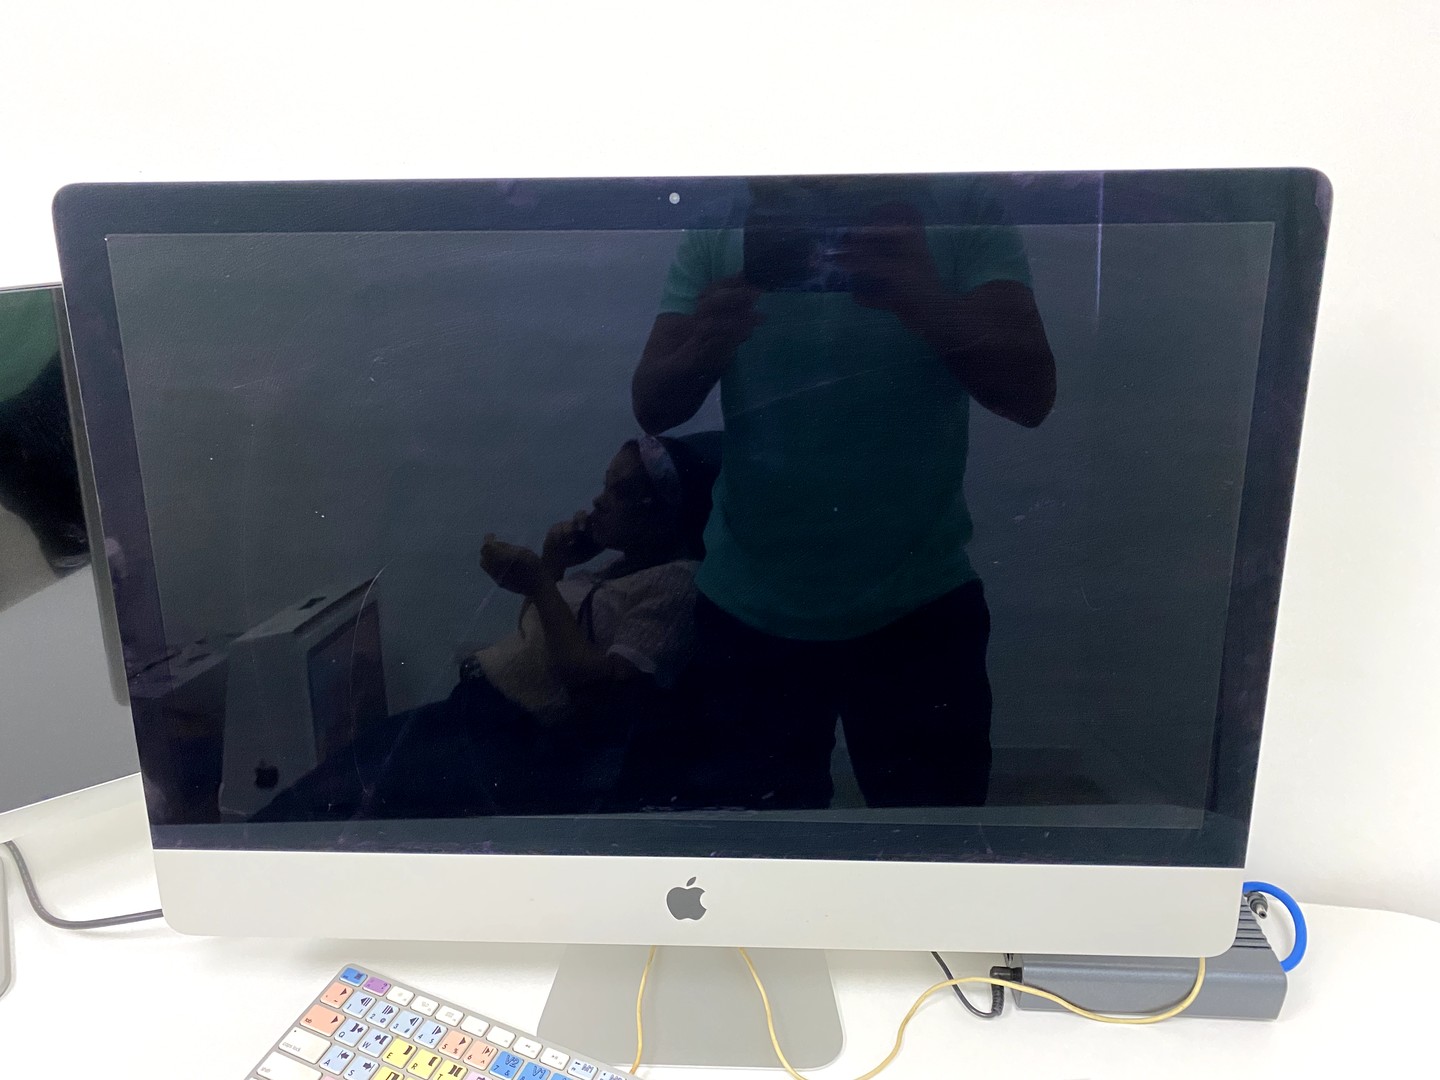 computadoras y laptops - iMac 27 inch retina 5K display